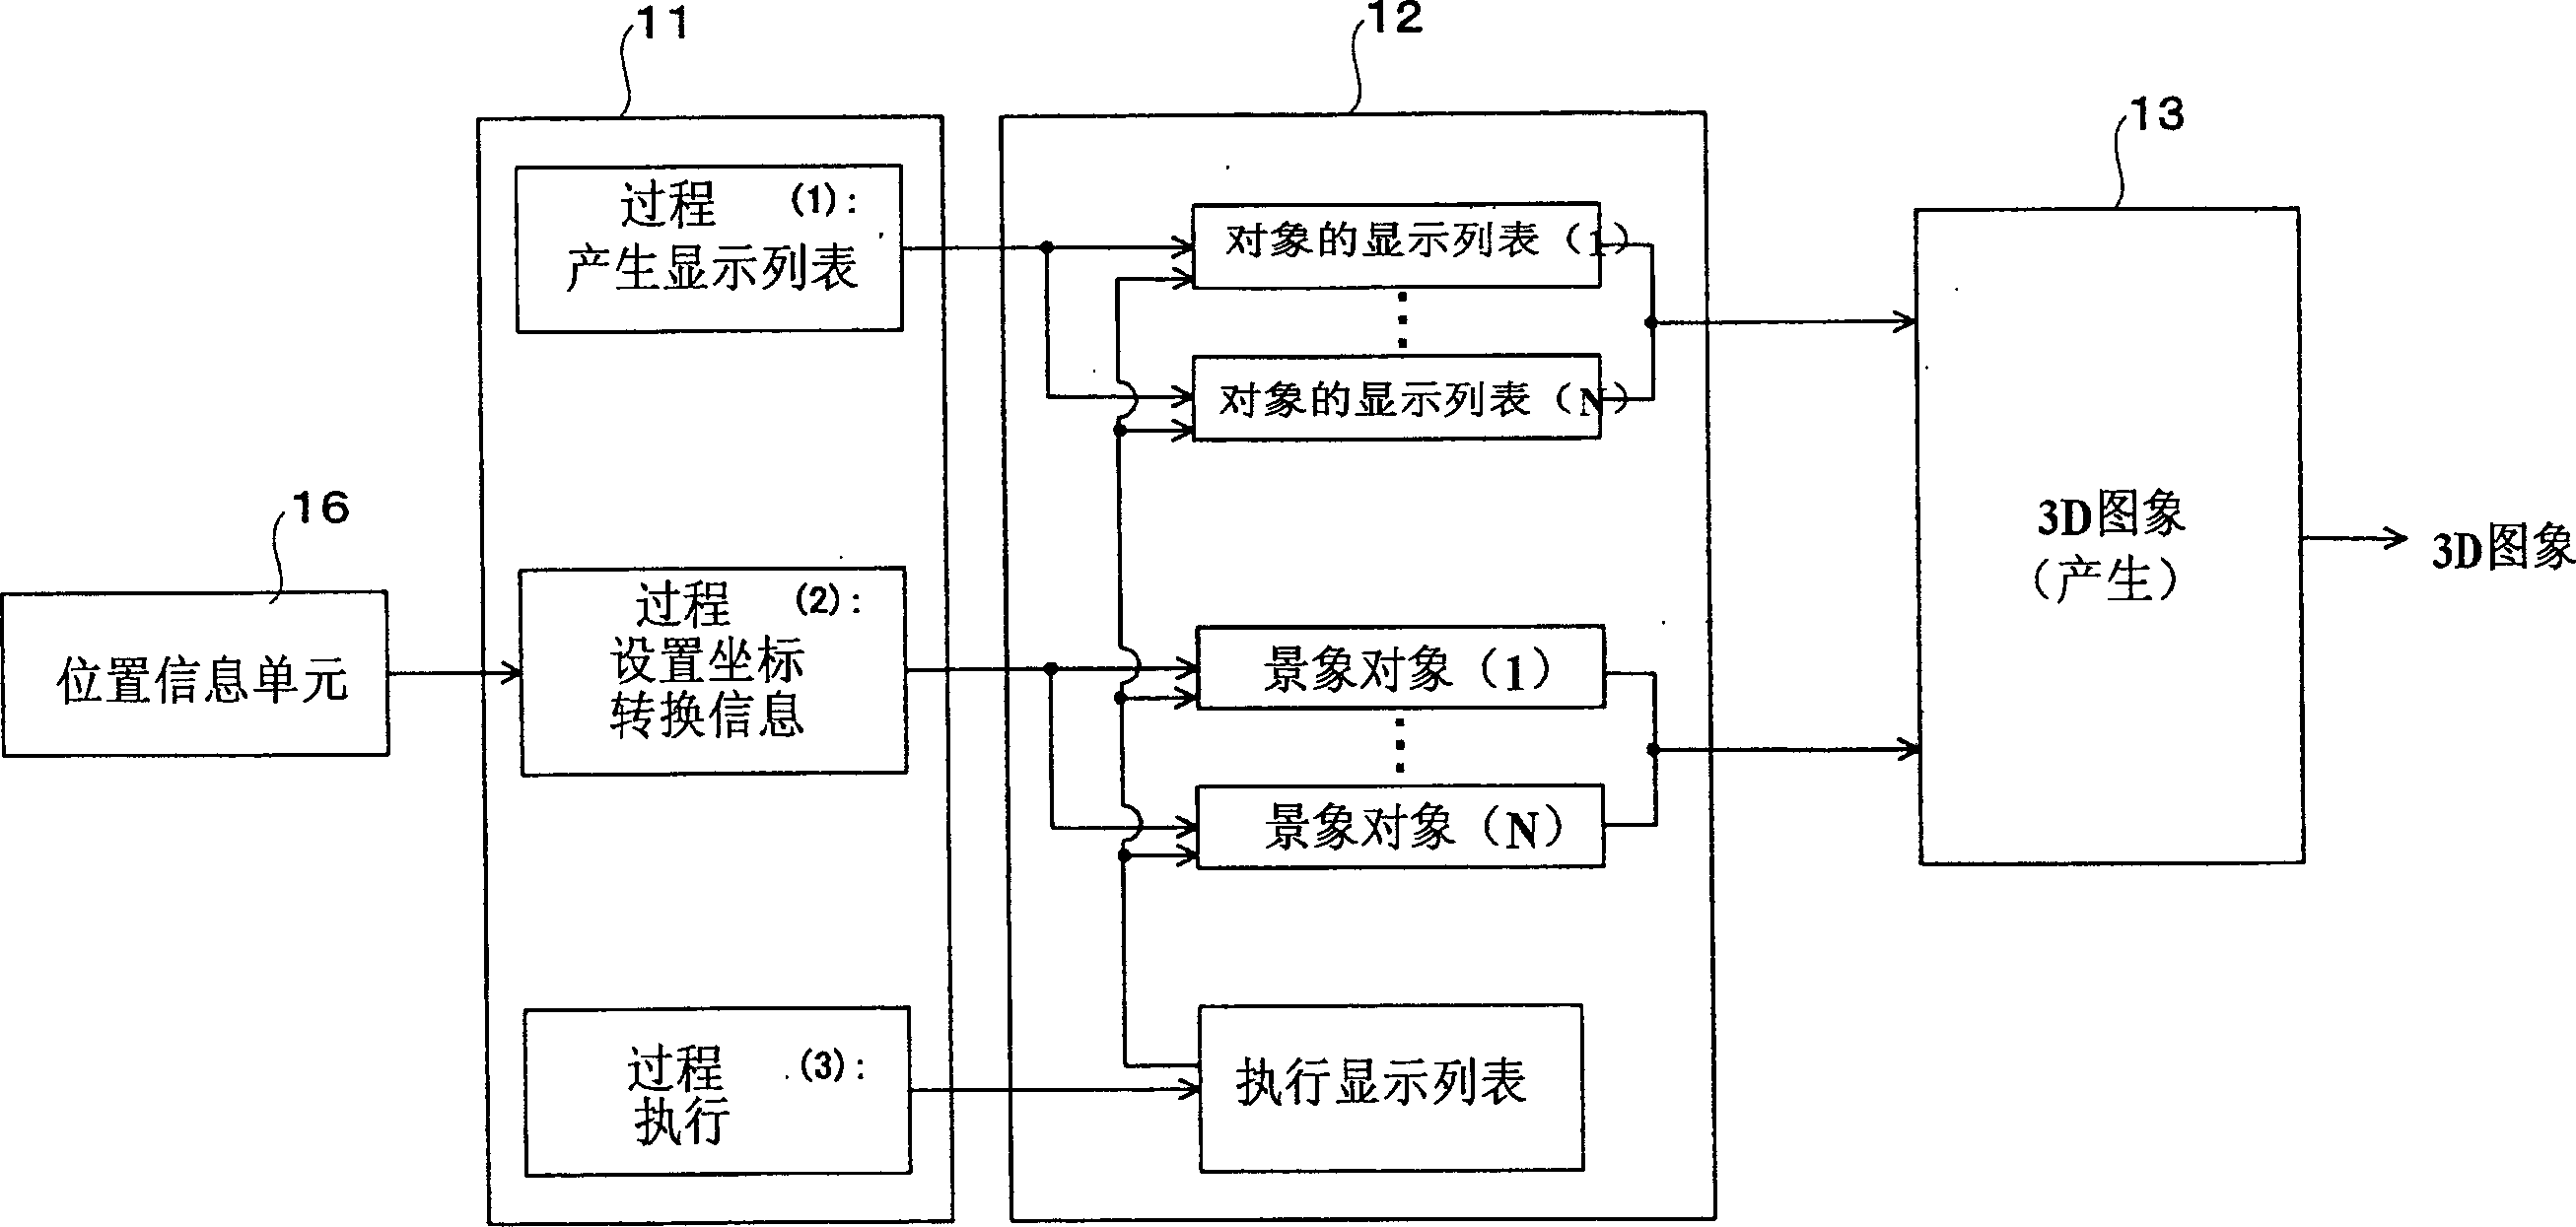 Image generating apparatus, image generating method, and computer program